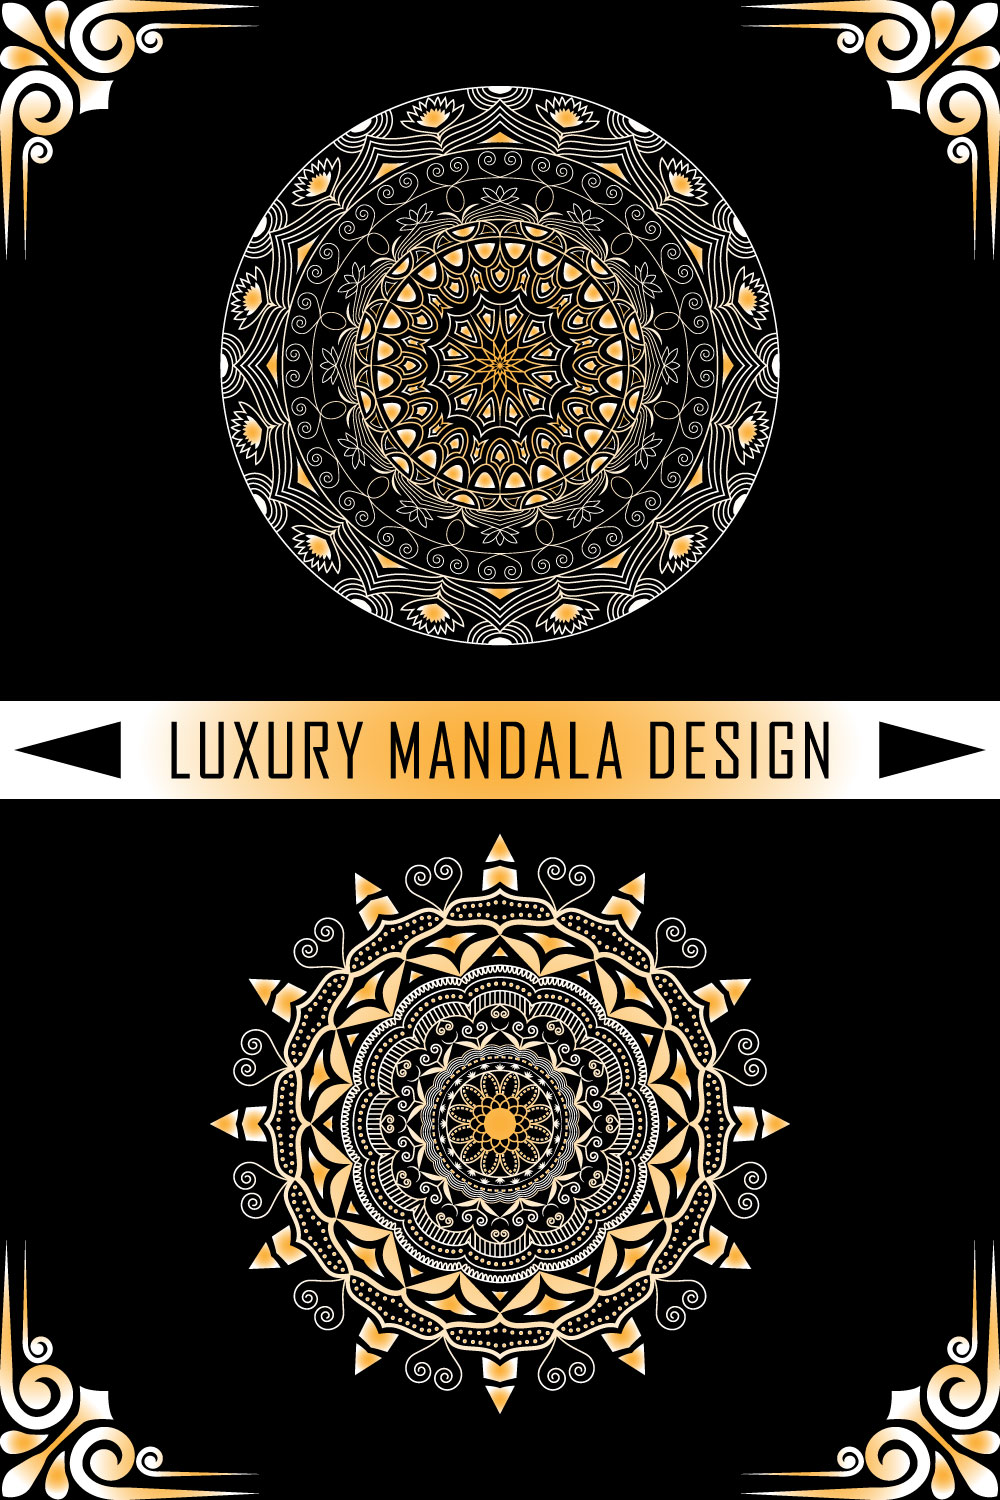 02 Luxury Mandala Design pinterest preview image.